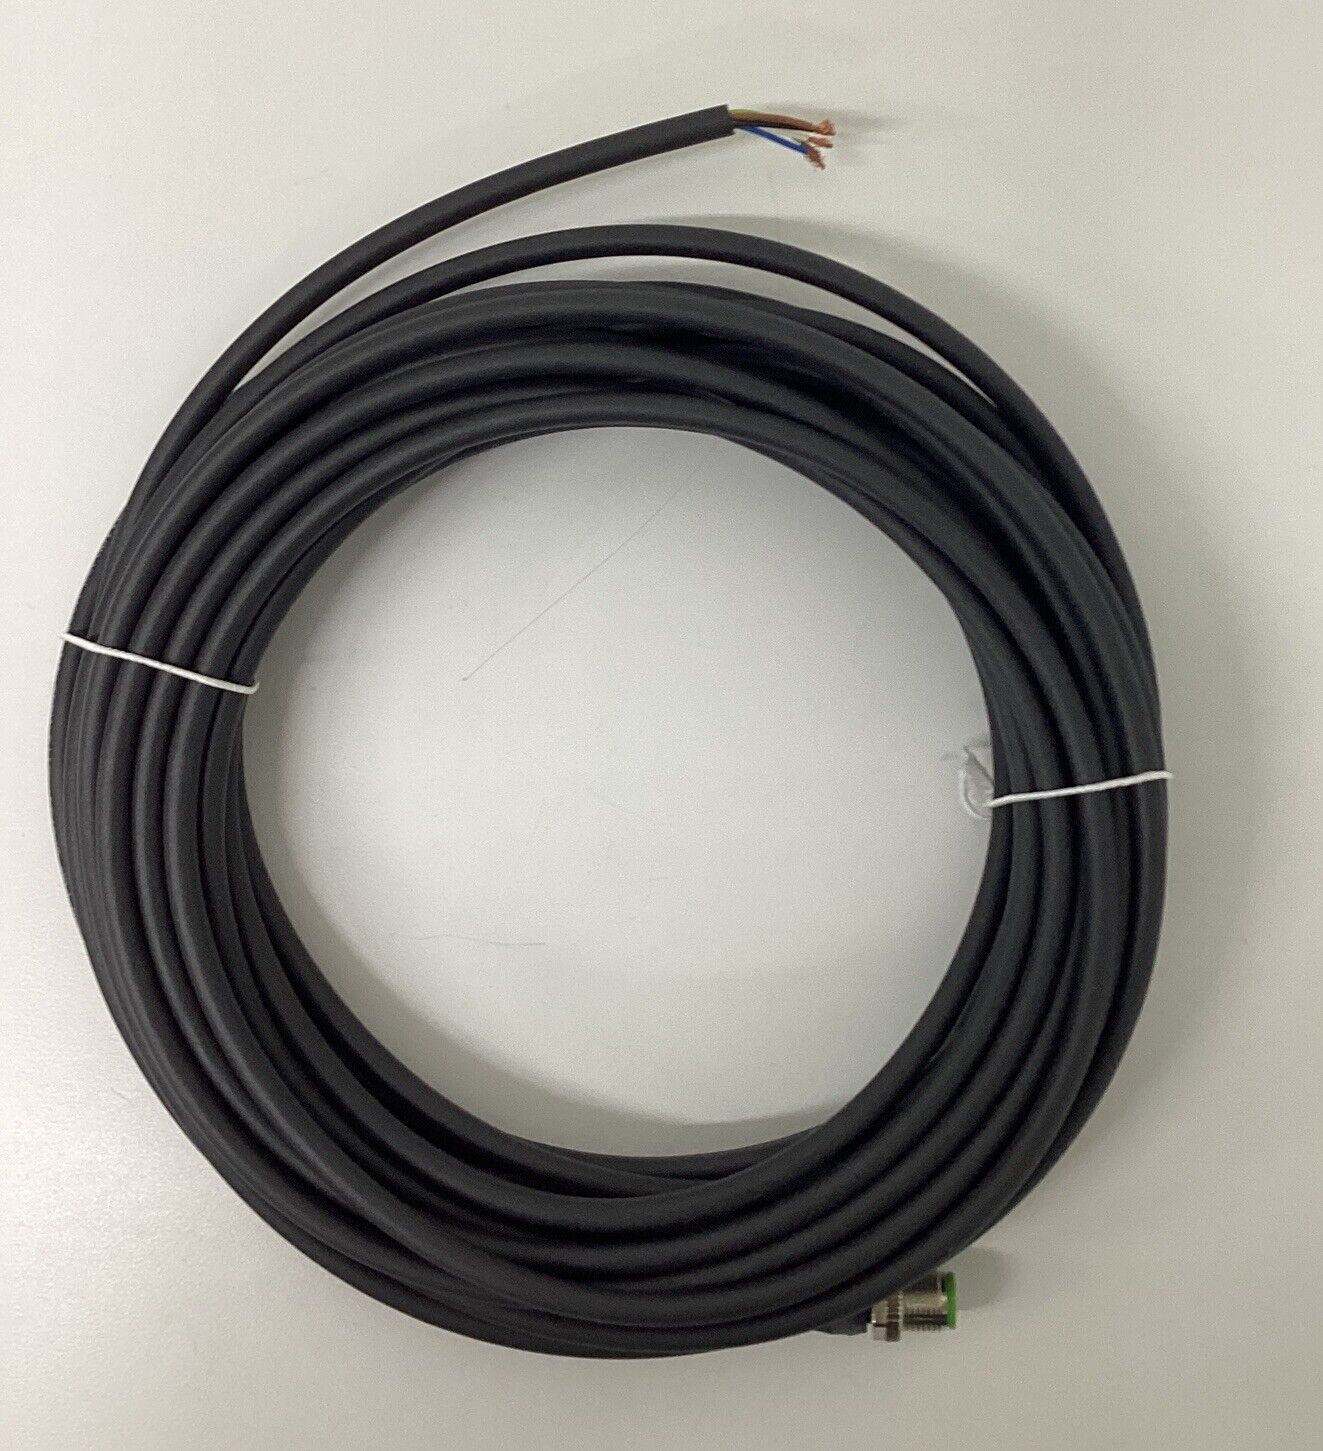 Murr 7000-12041-6251000 M12 Male Single-end 5-Wire Cable 10M (BL125)